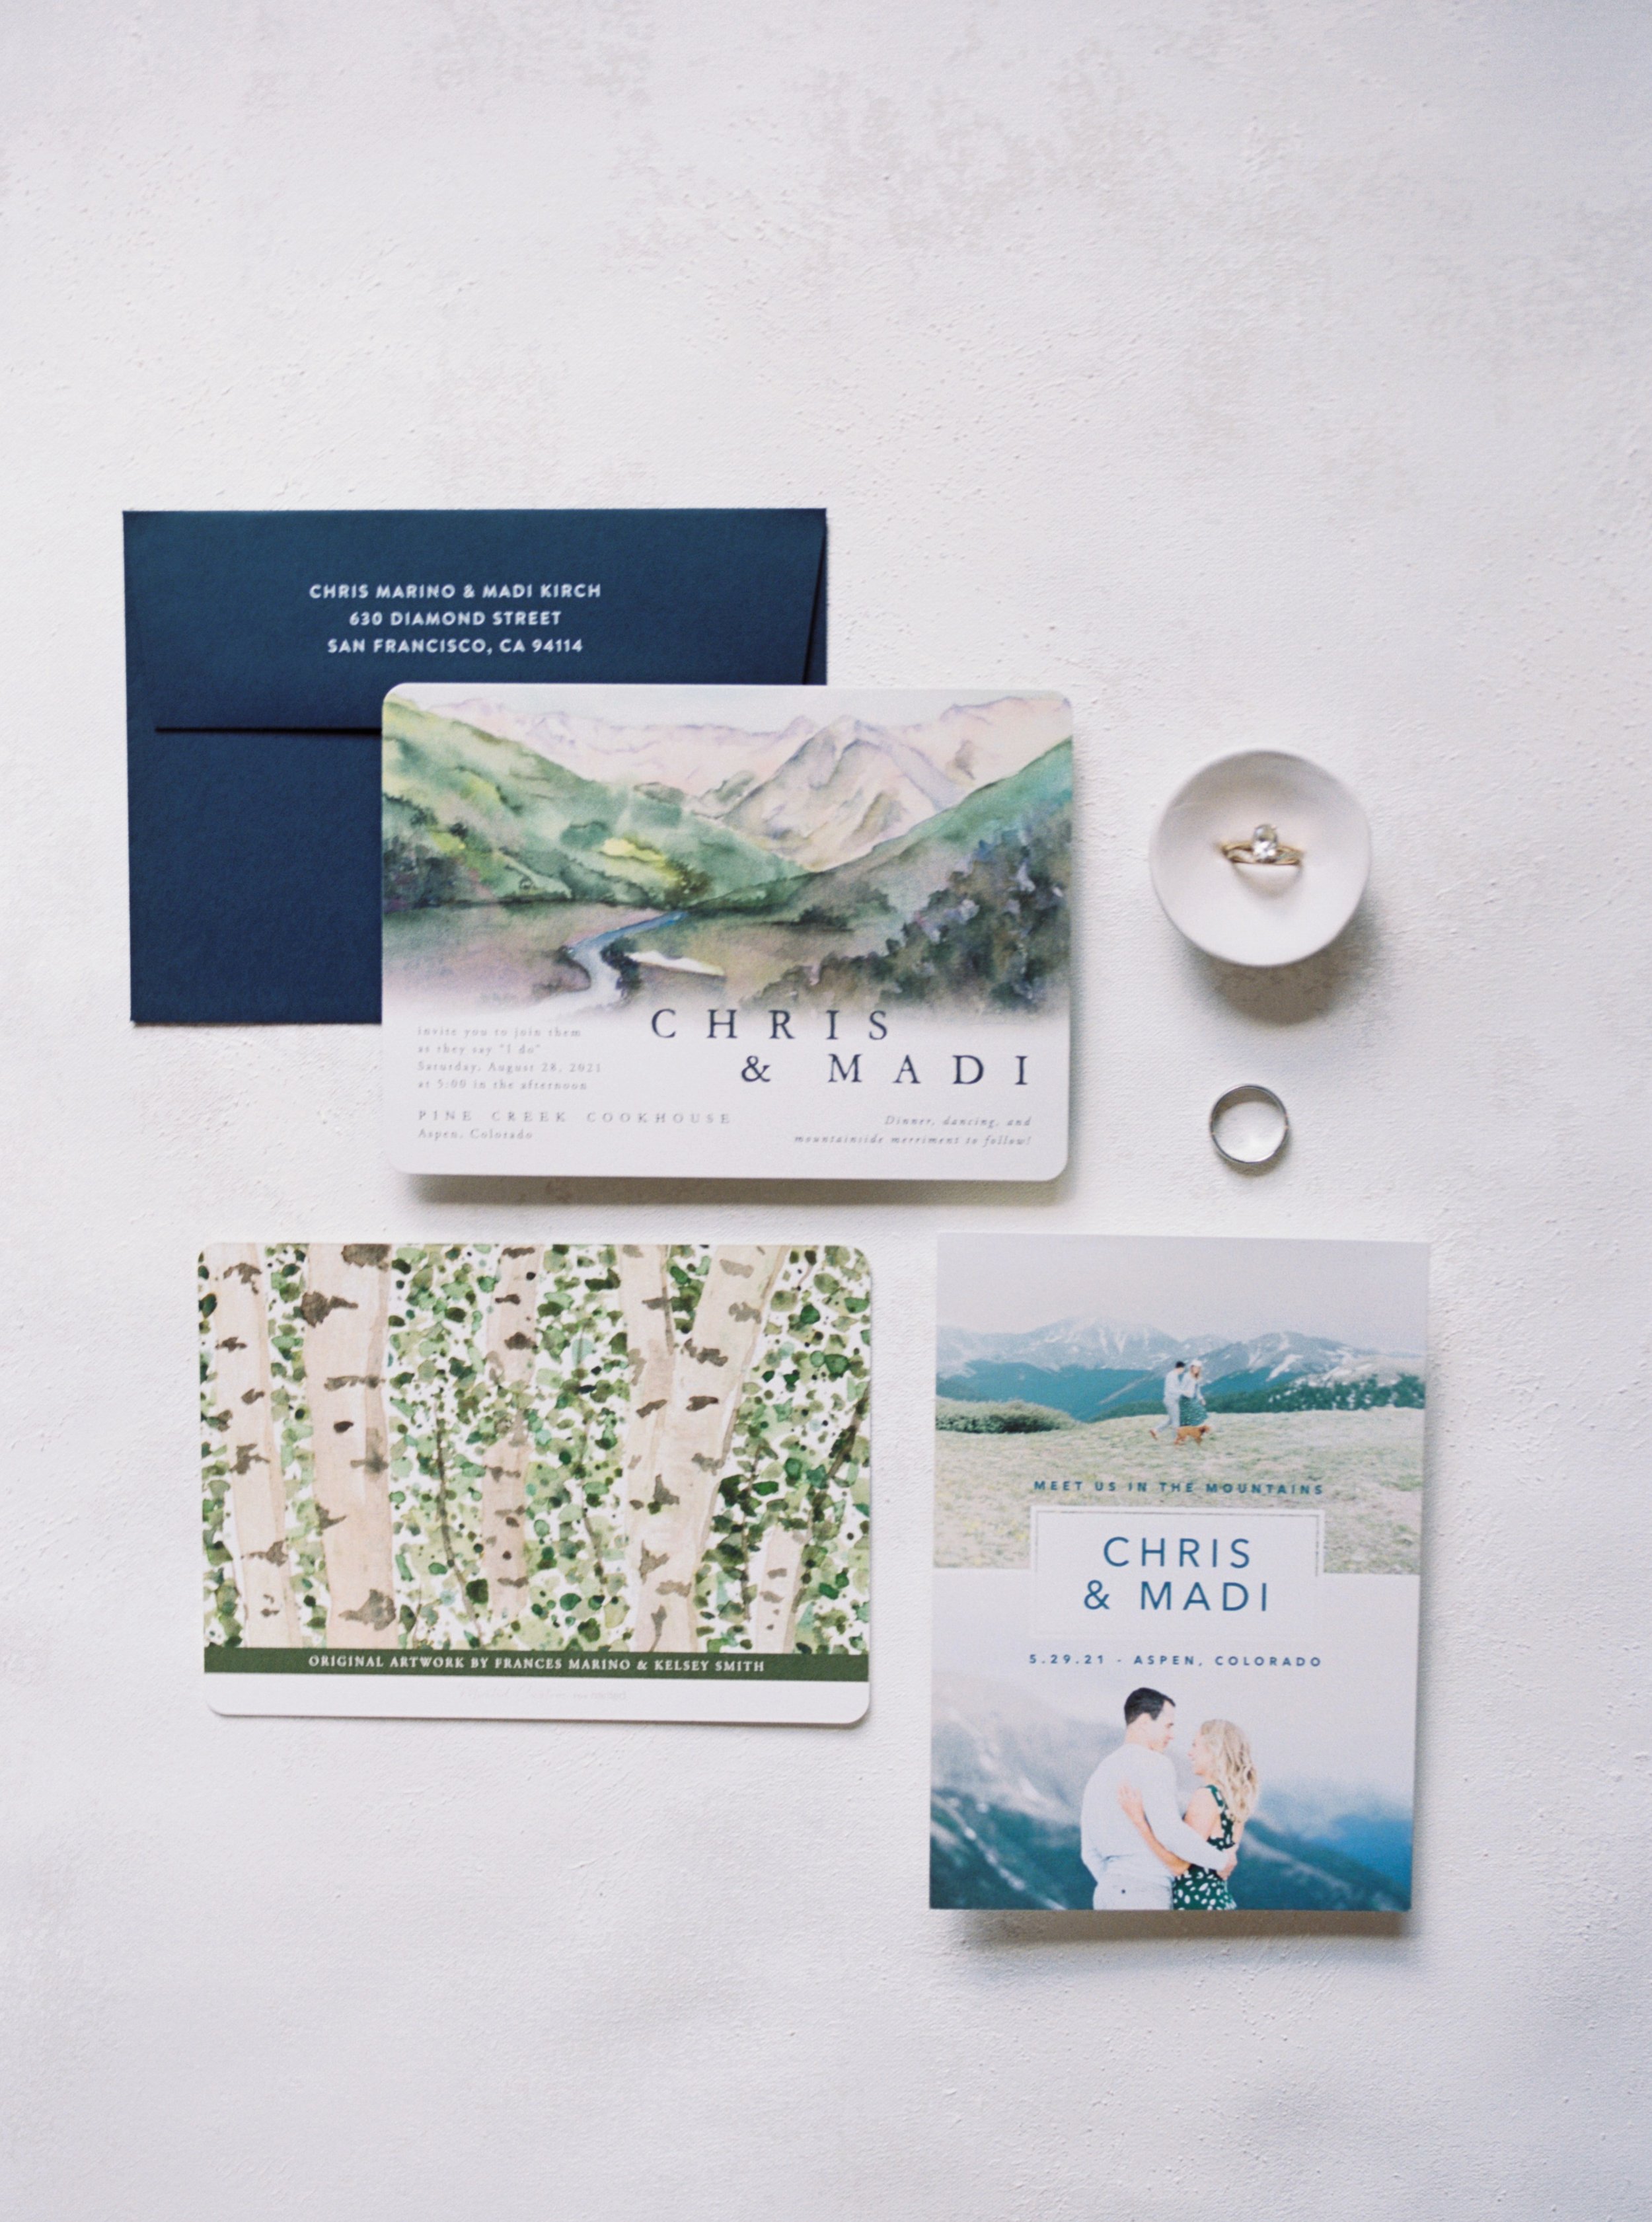 watercolor wedding invitations with a blue color vibe for a aspen, colorado wedding.